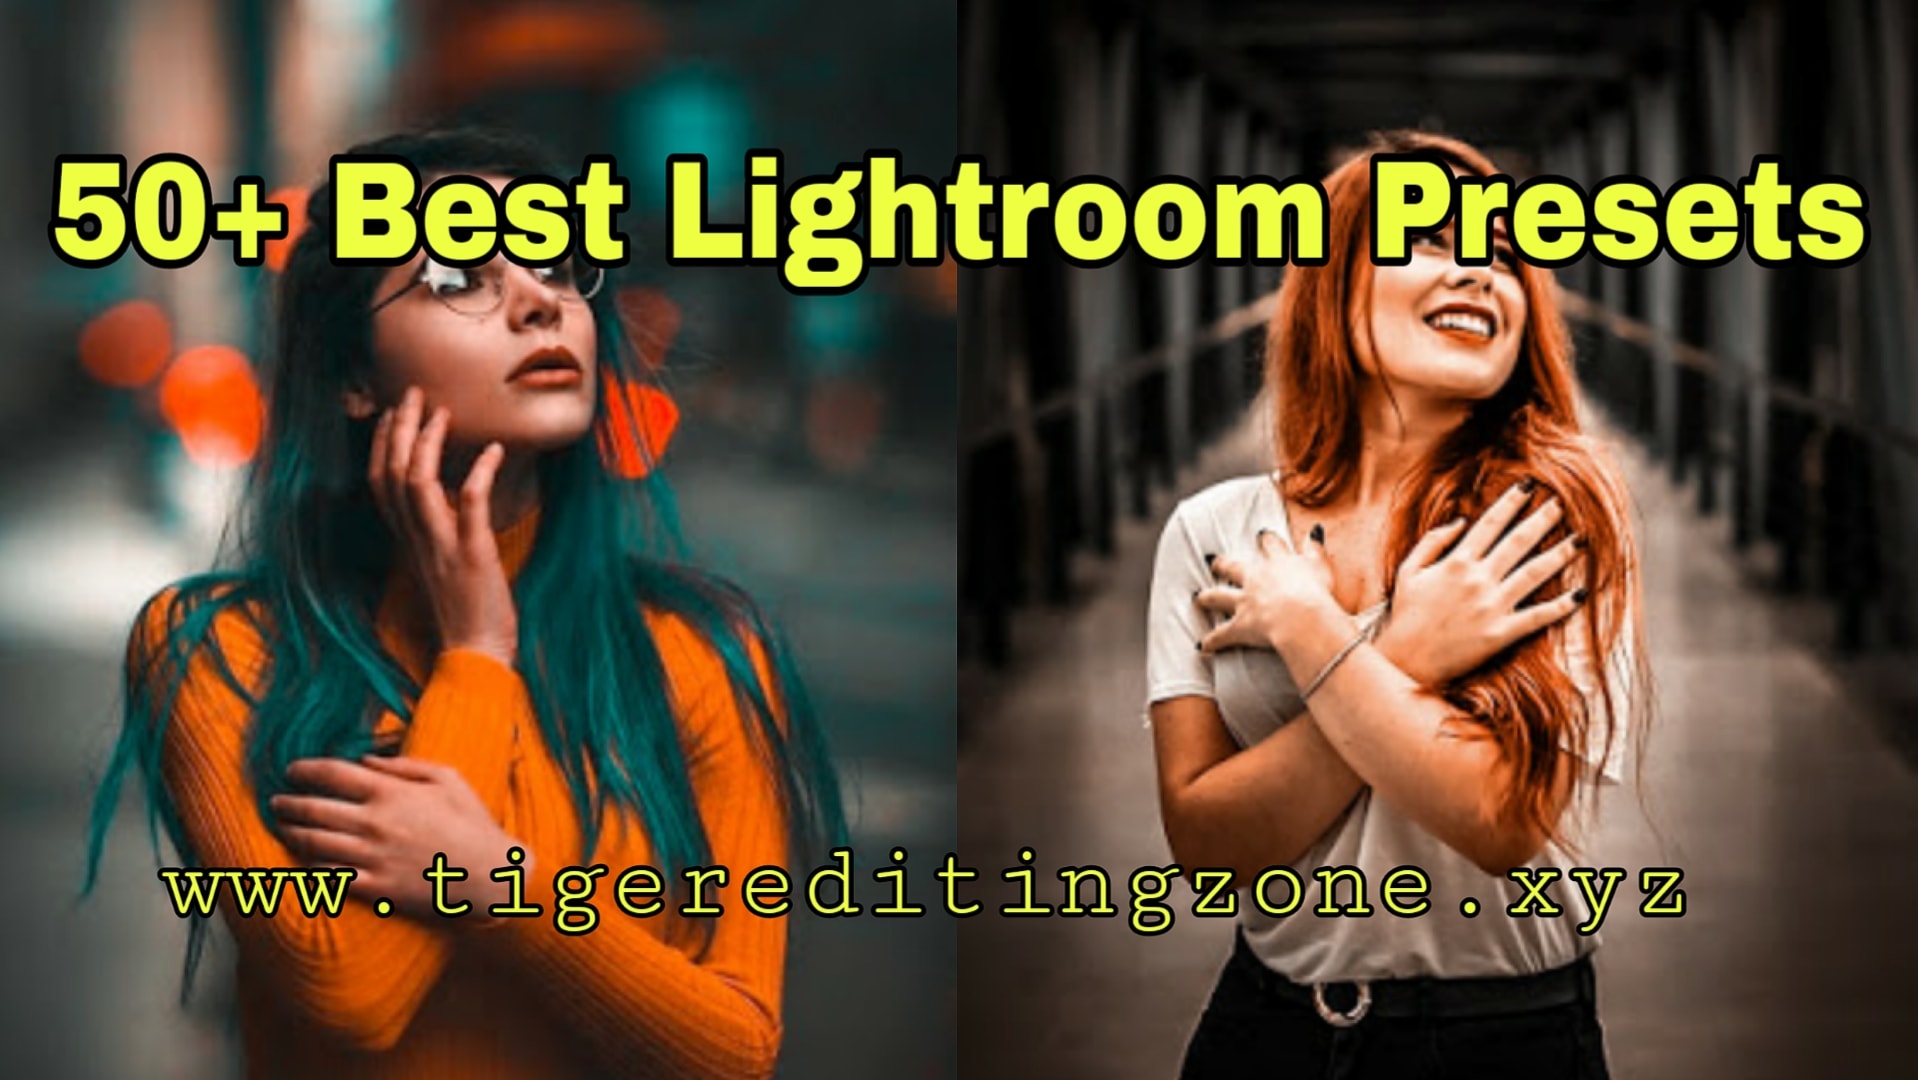 Top 50+ Lightrooom Prestes Free Download in 2021 - Zip File